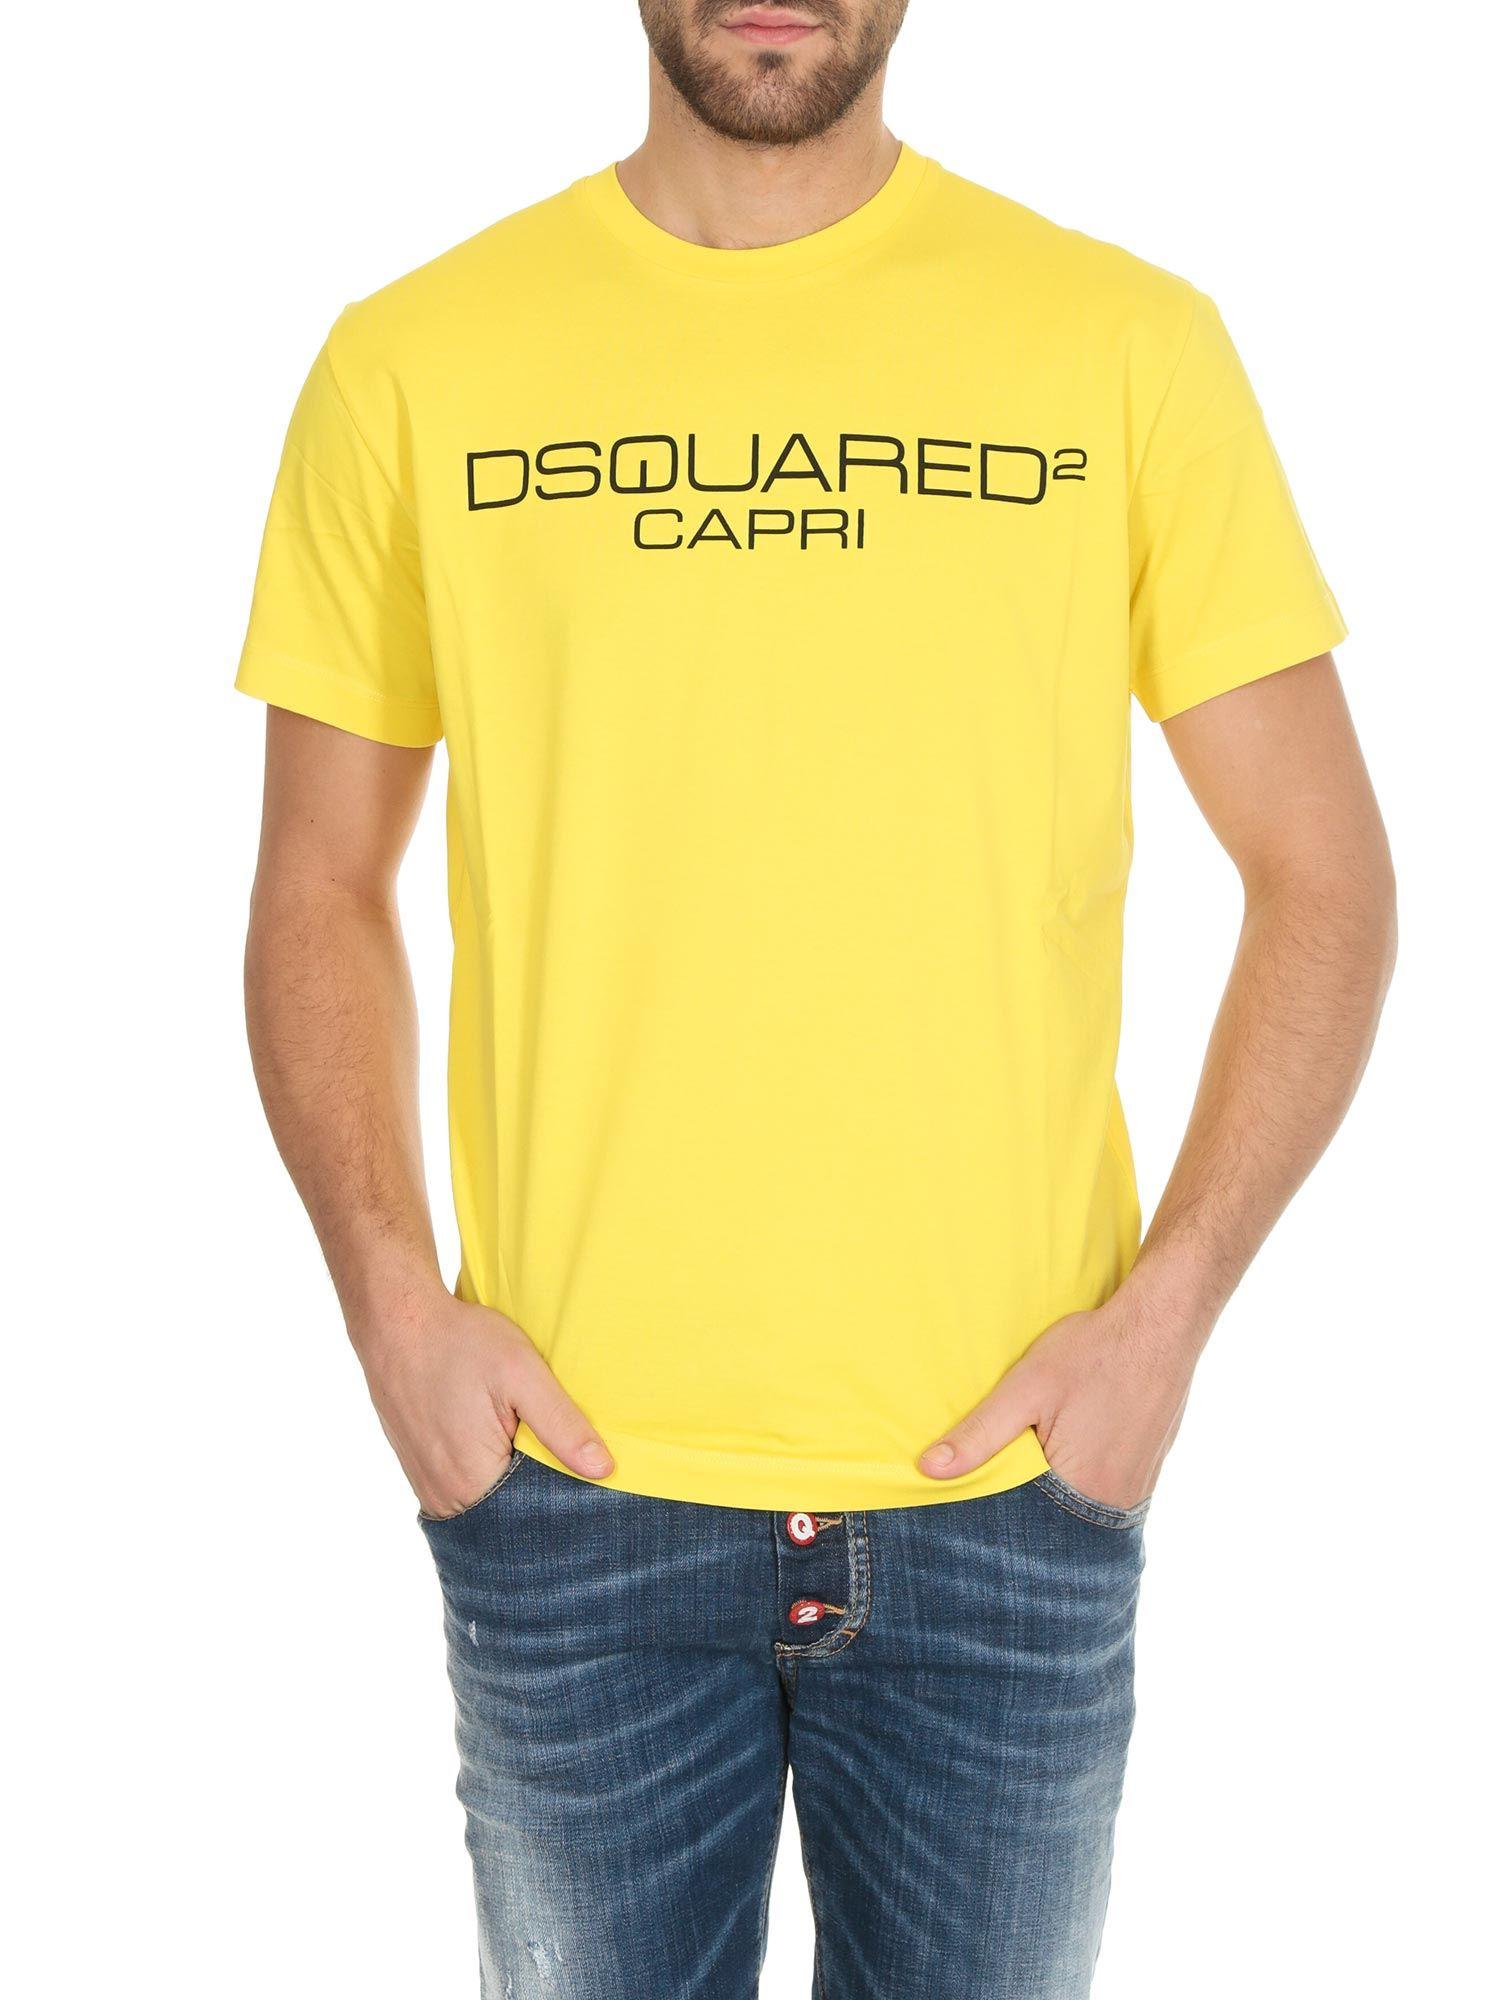 Dsquared Capri T Shirt Britain, SAVE 40% - www.fourwoodcapital.com